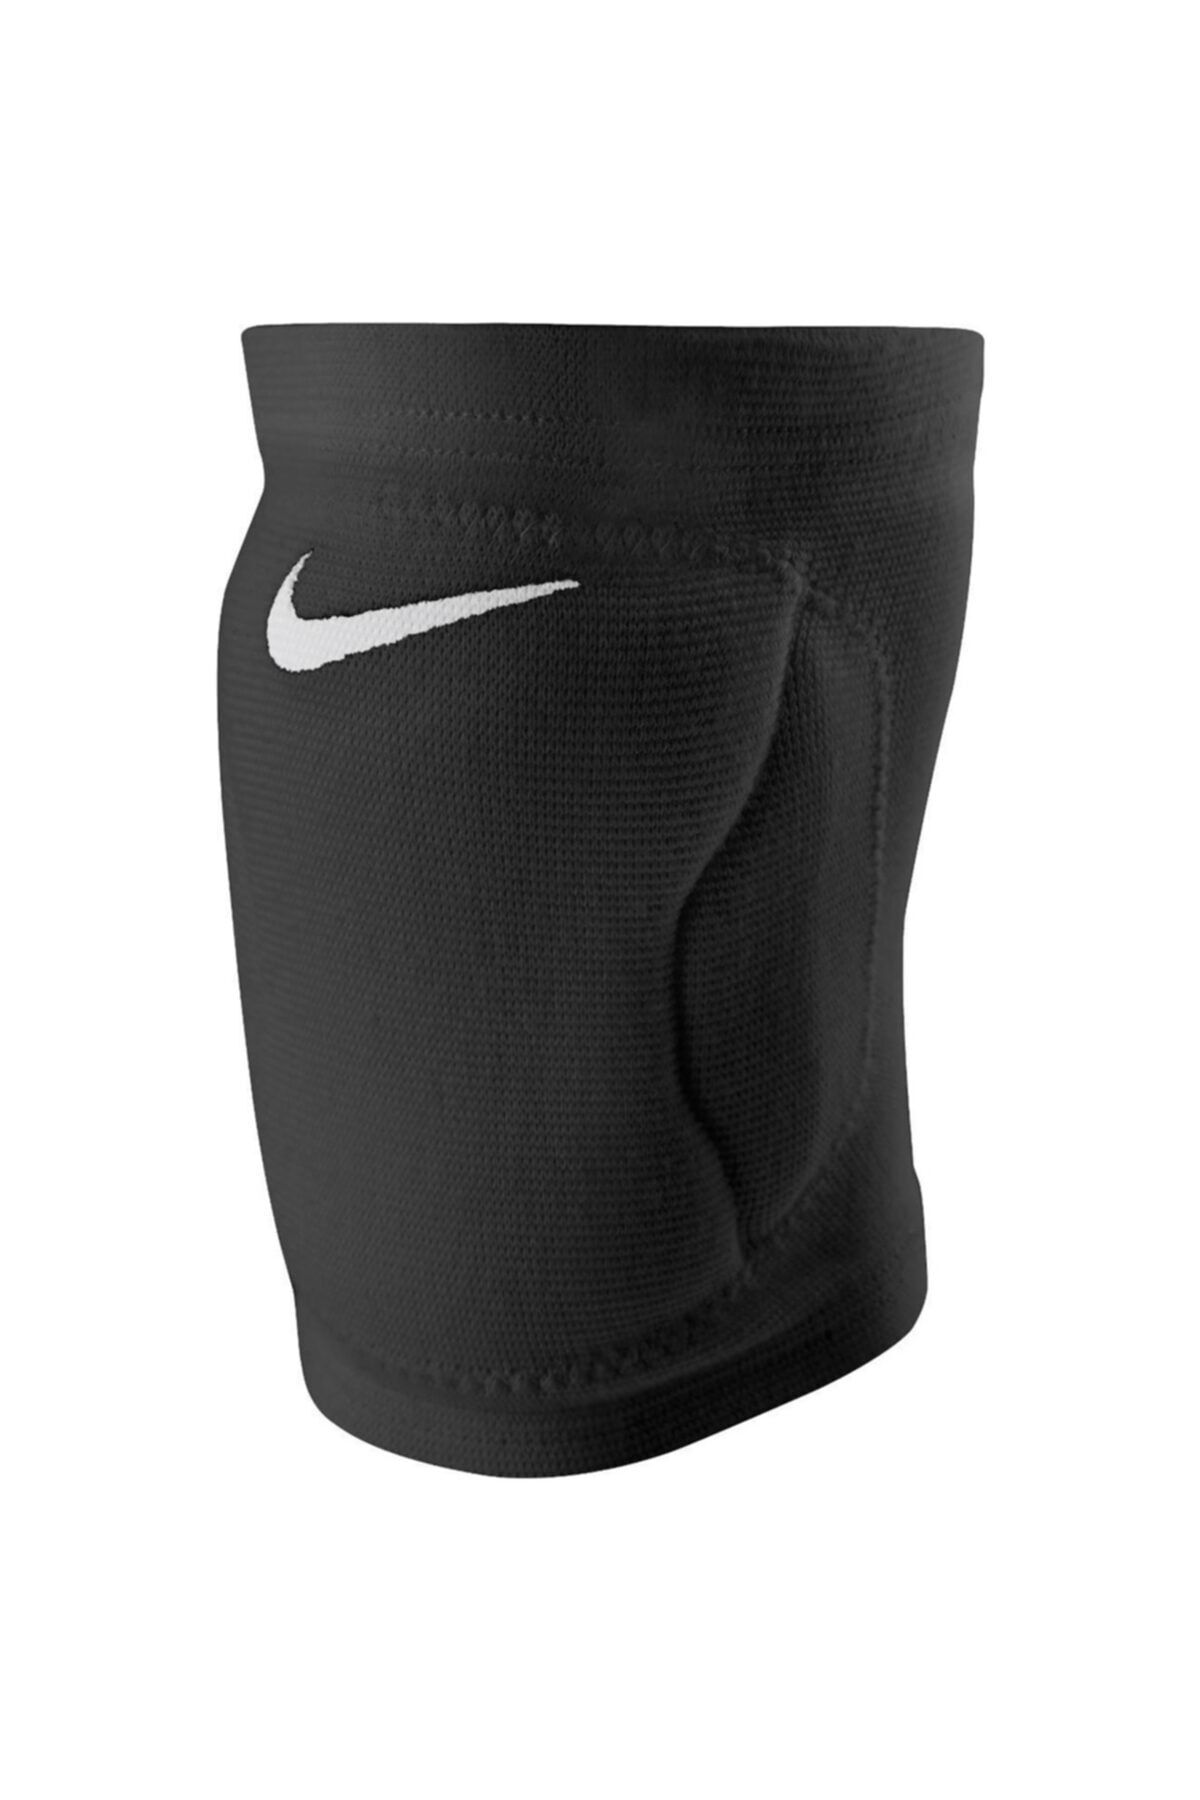 Nike Streak Volleyball Knee Pad Unisex Siyah Voleybol Dizlik N.vp.05.001.ml